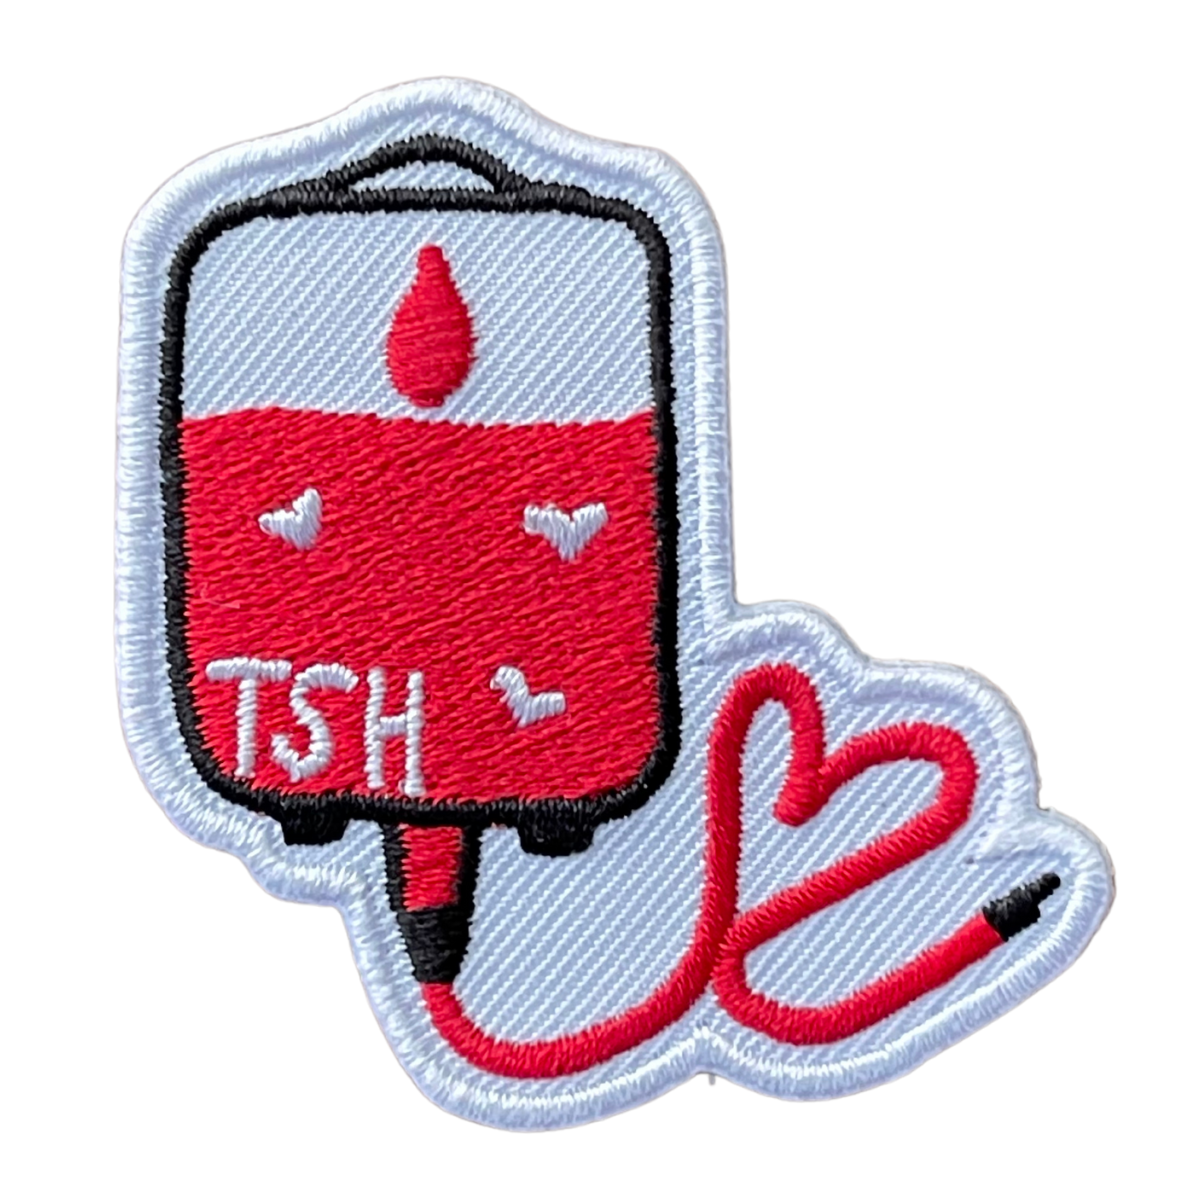 Blood Transfusion Patch - TinySuperheroes